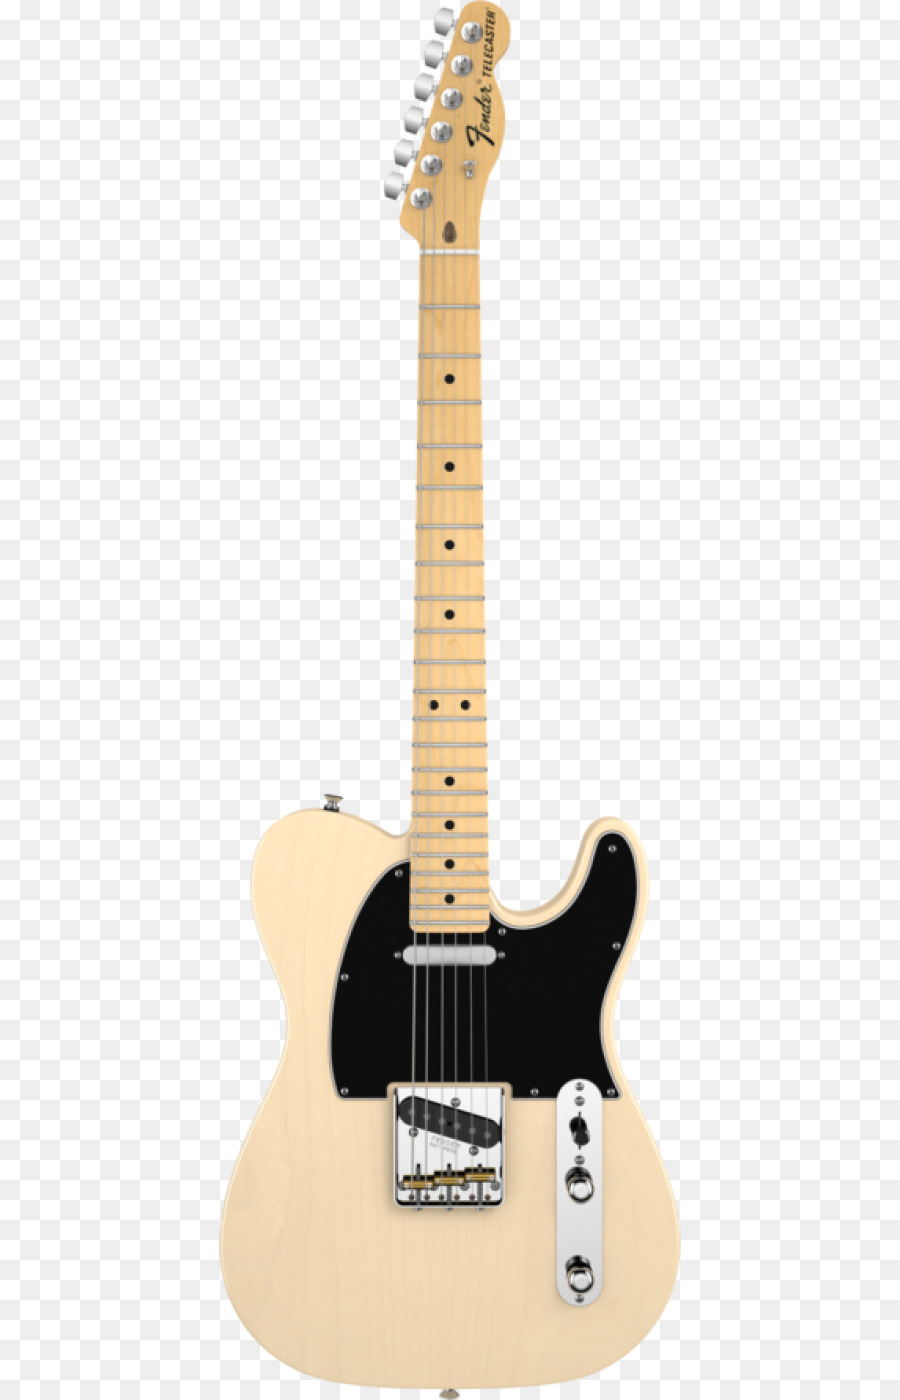 Fender Telecaster Fender Musical Instruments Corporation Fender American Special Telecaster E-Gitarre - Gitarre